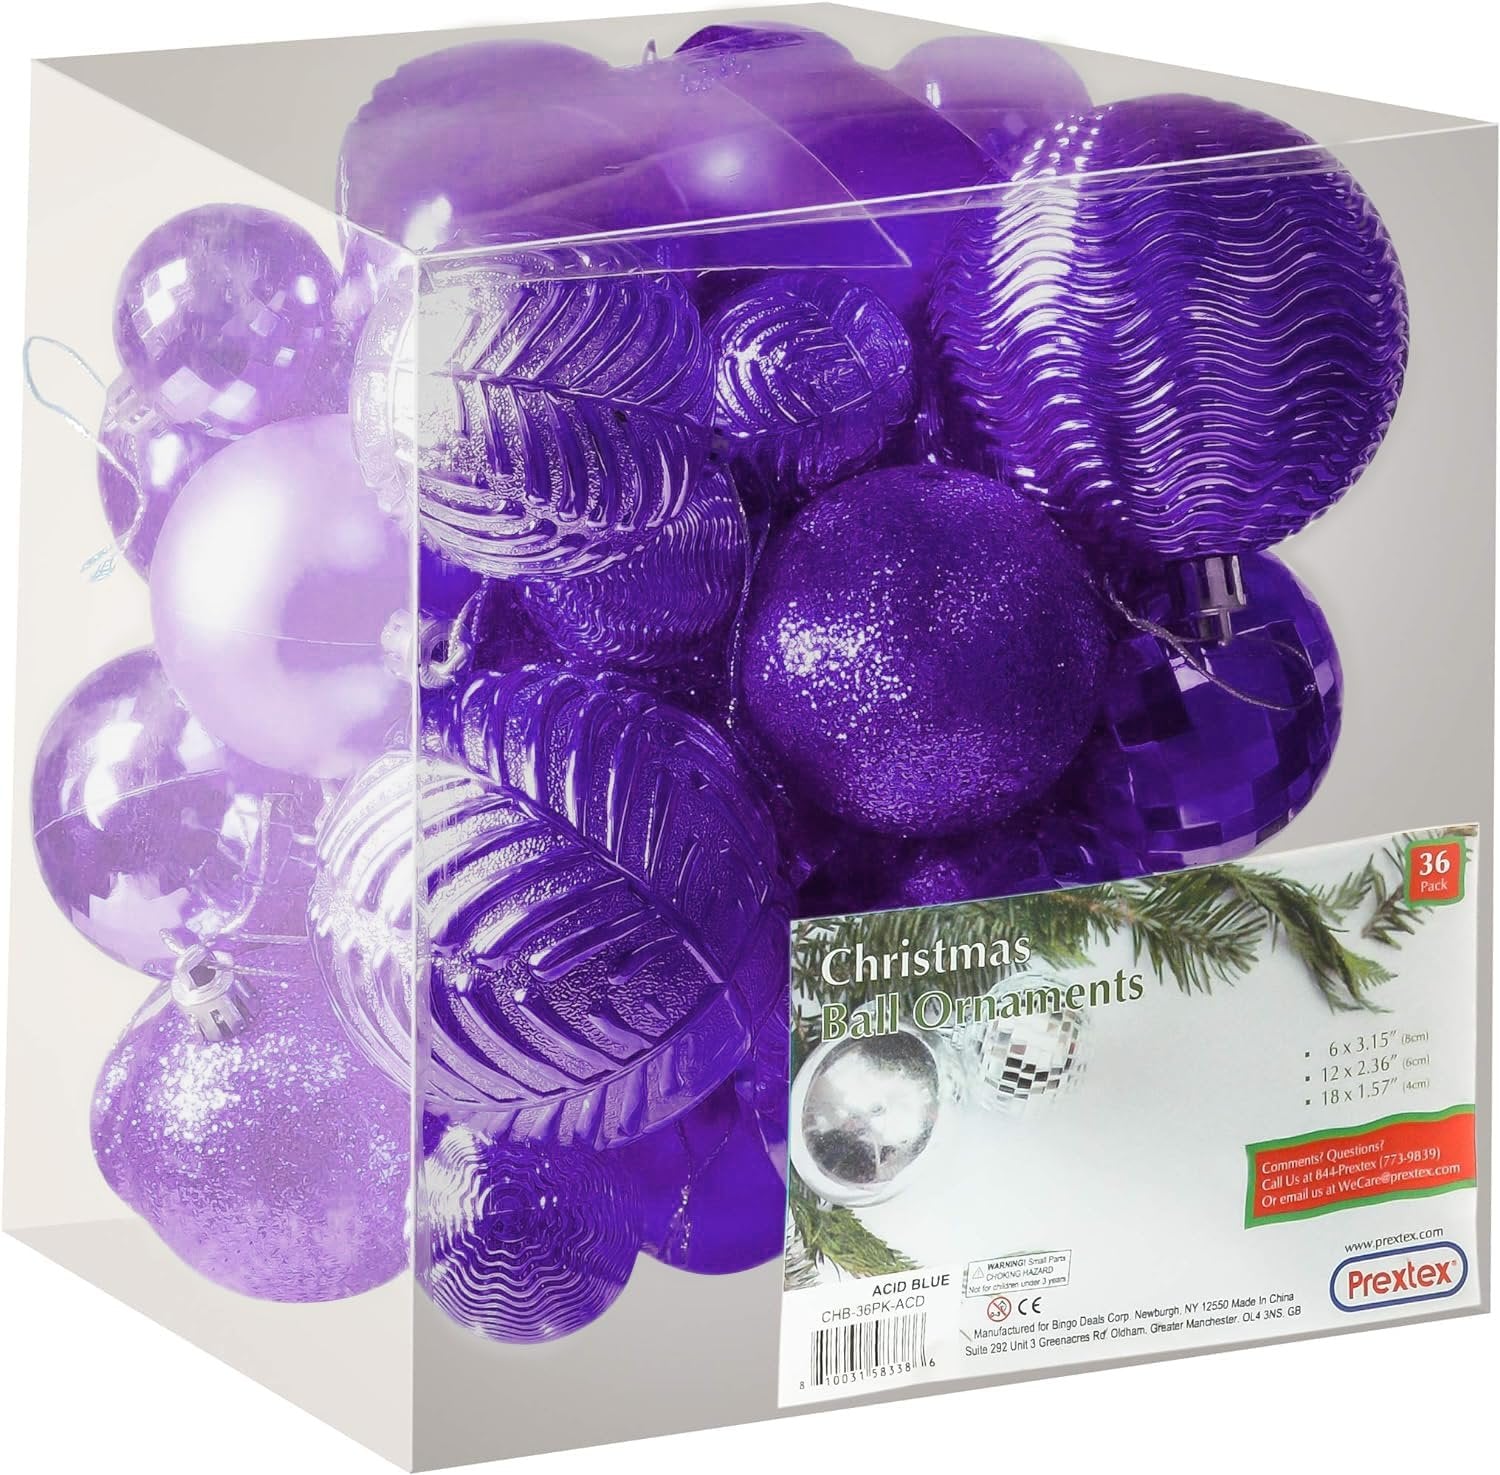 Prextex Christmas Tree Ornaments - Purple Christmas Ball Ornaments Set for Christmas, Holiday, Wreath & Party Decorations (36 pcs - Small, Medium, Large) Shatterproof, 3 Size Combo